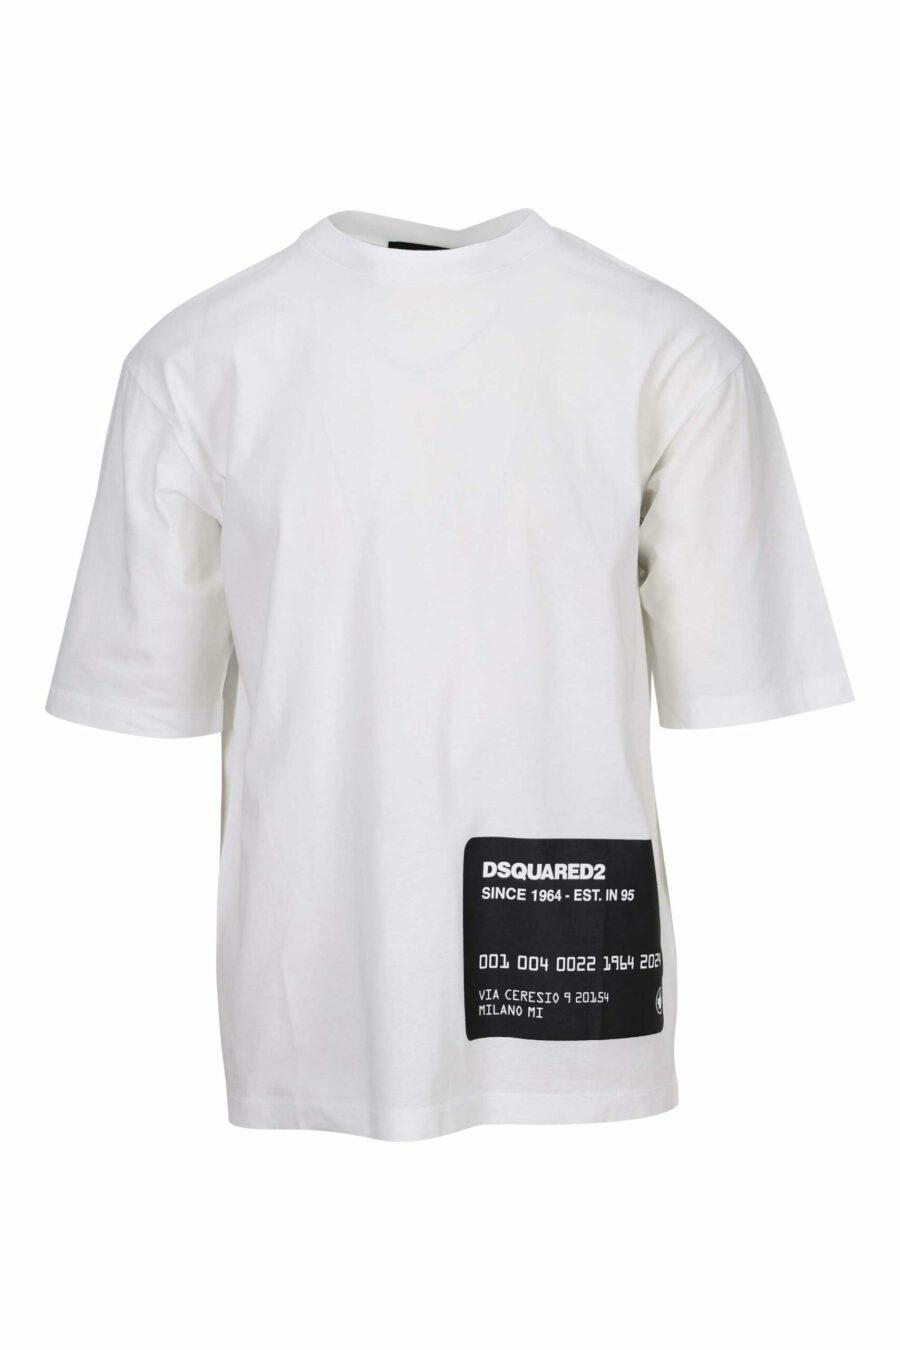 Camiseta blanca "oversize" con logo tarjeta de crédito bajo - 8054148265540 scaled